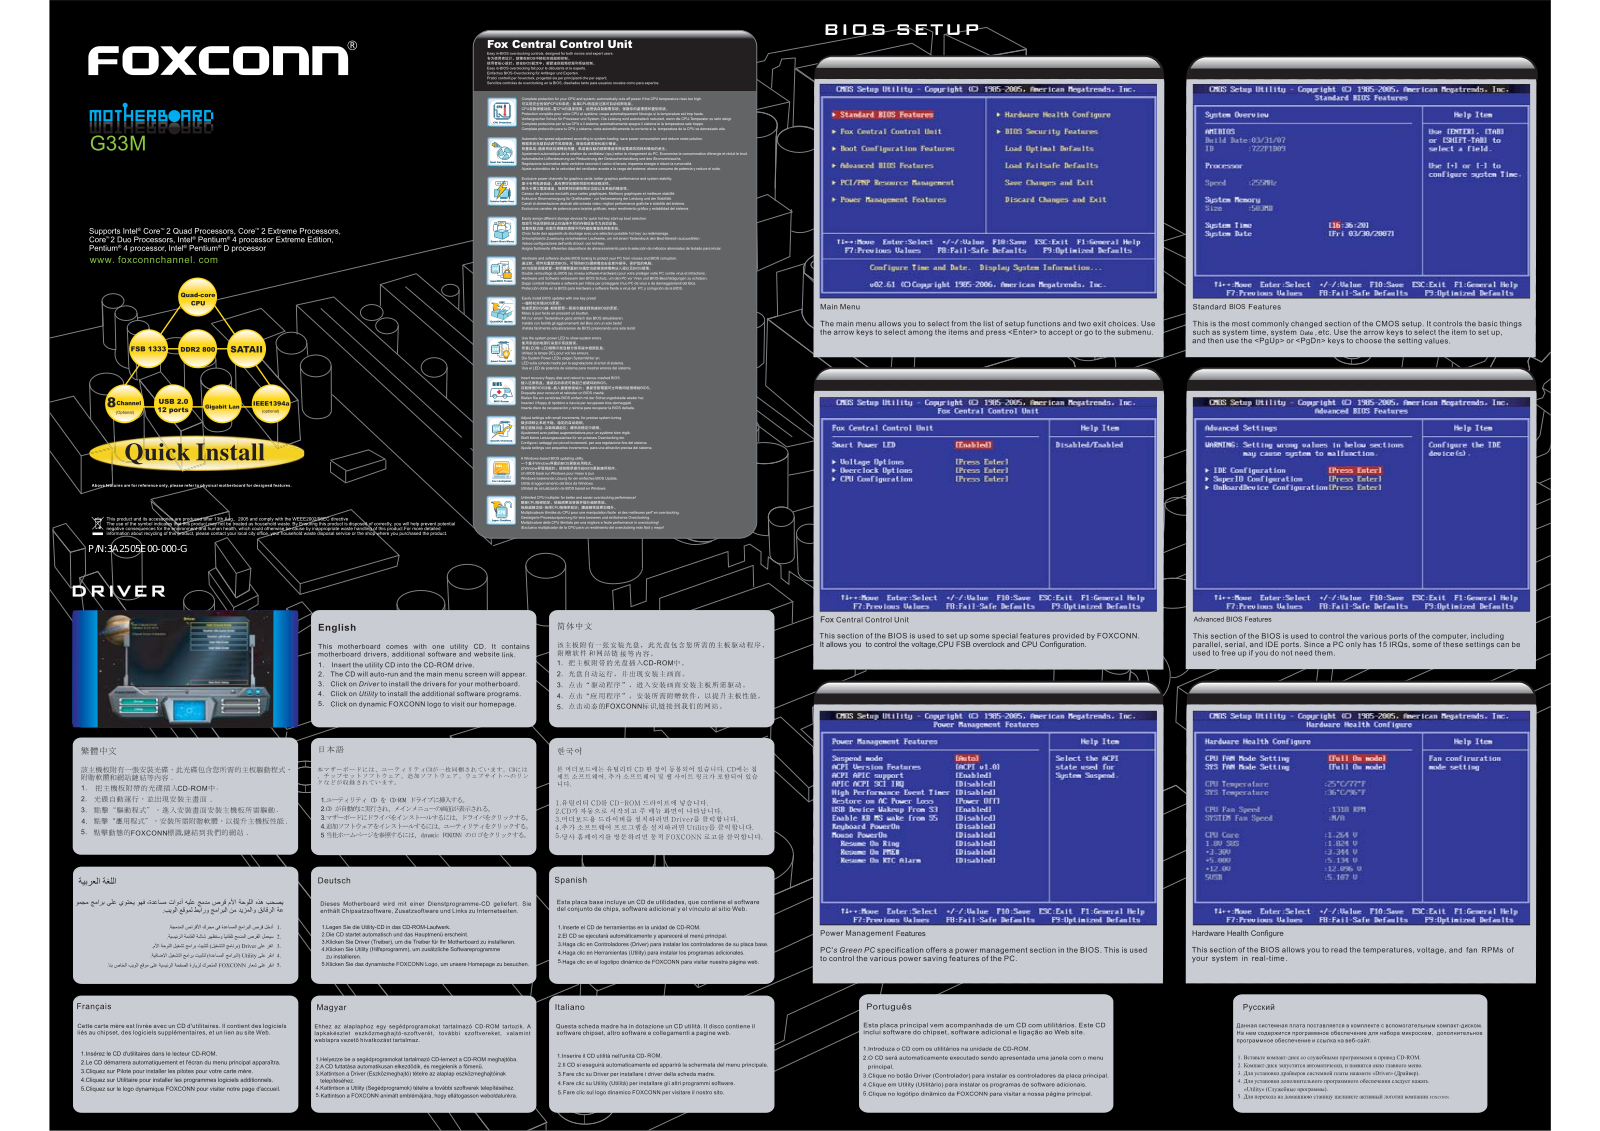 FOXCONN G33M User Manual